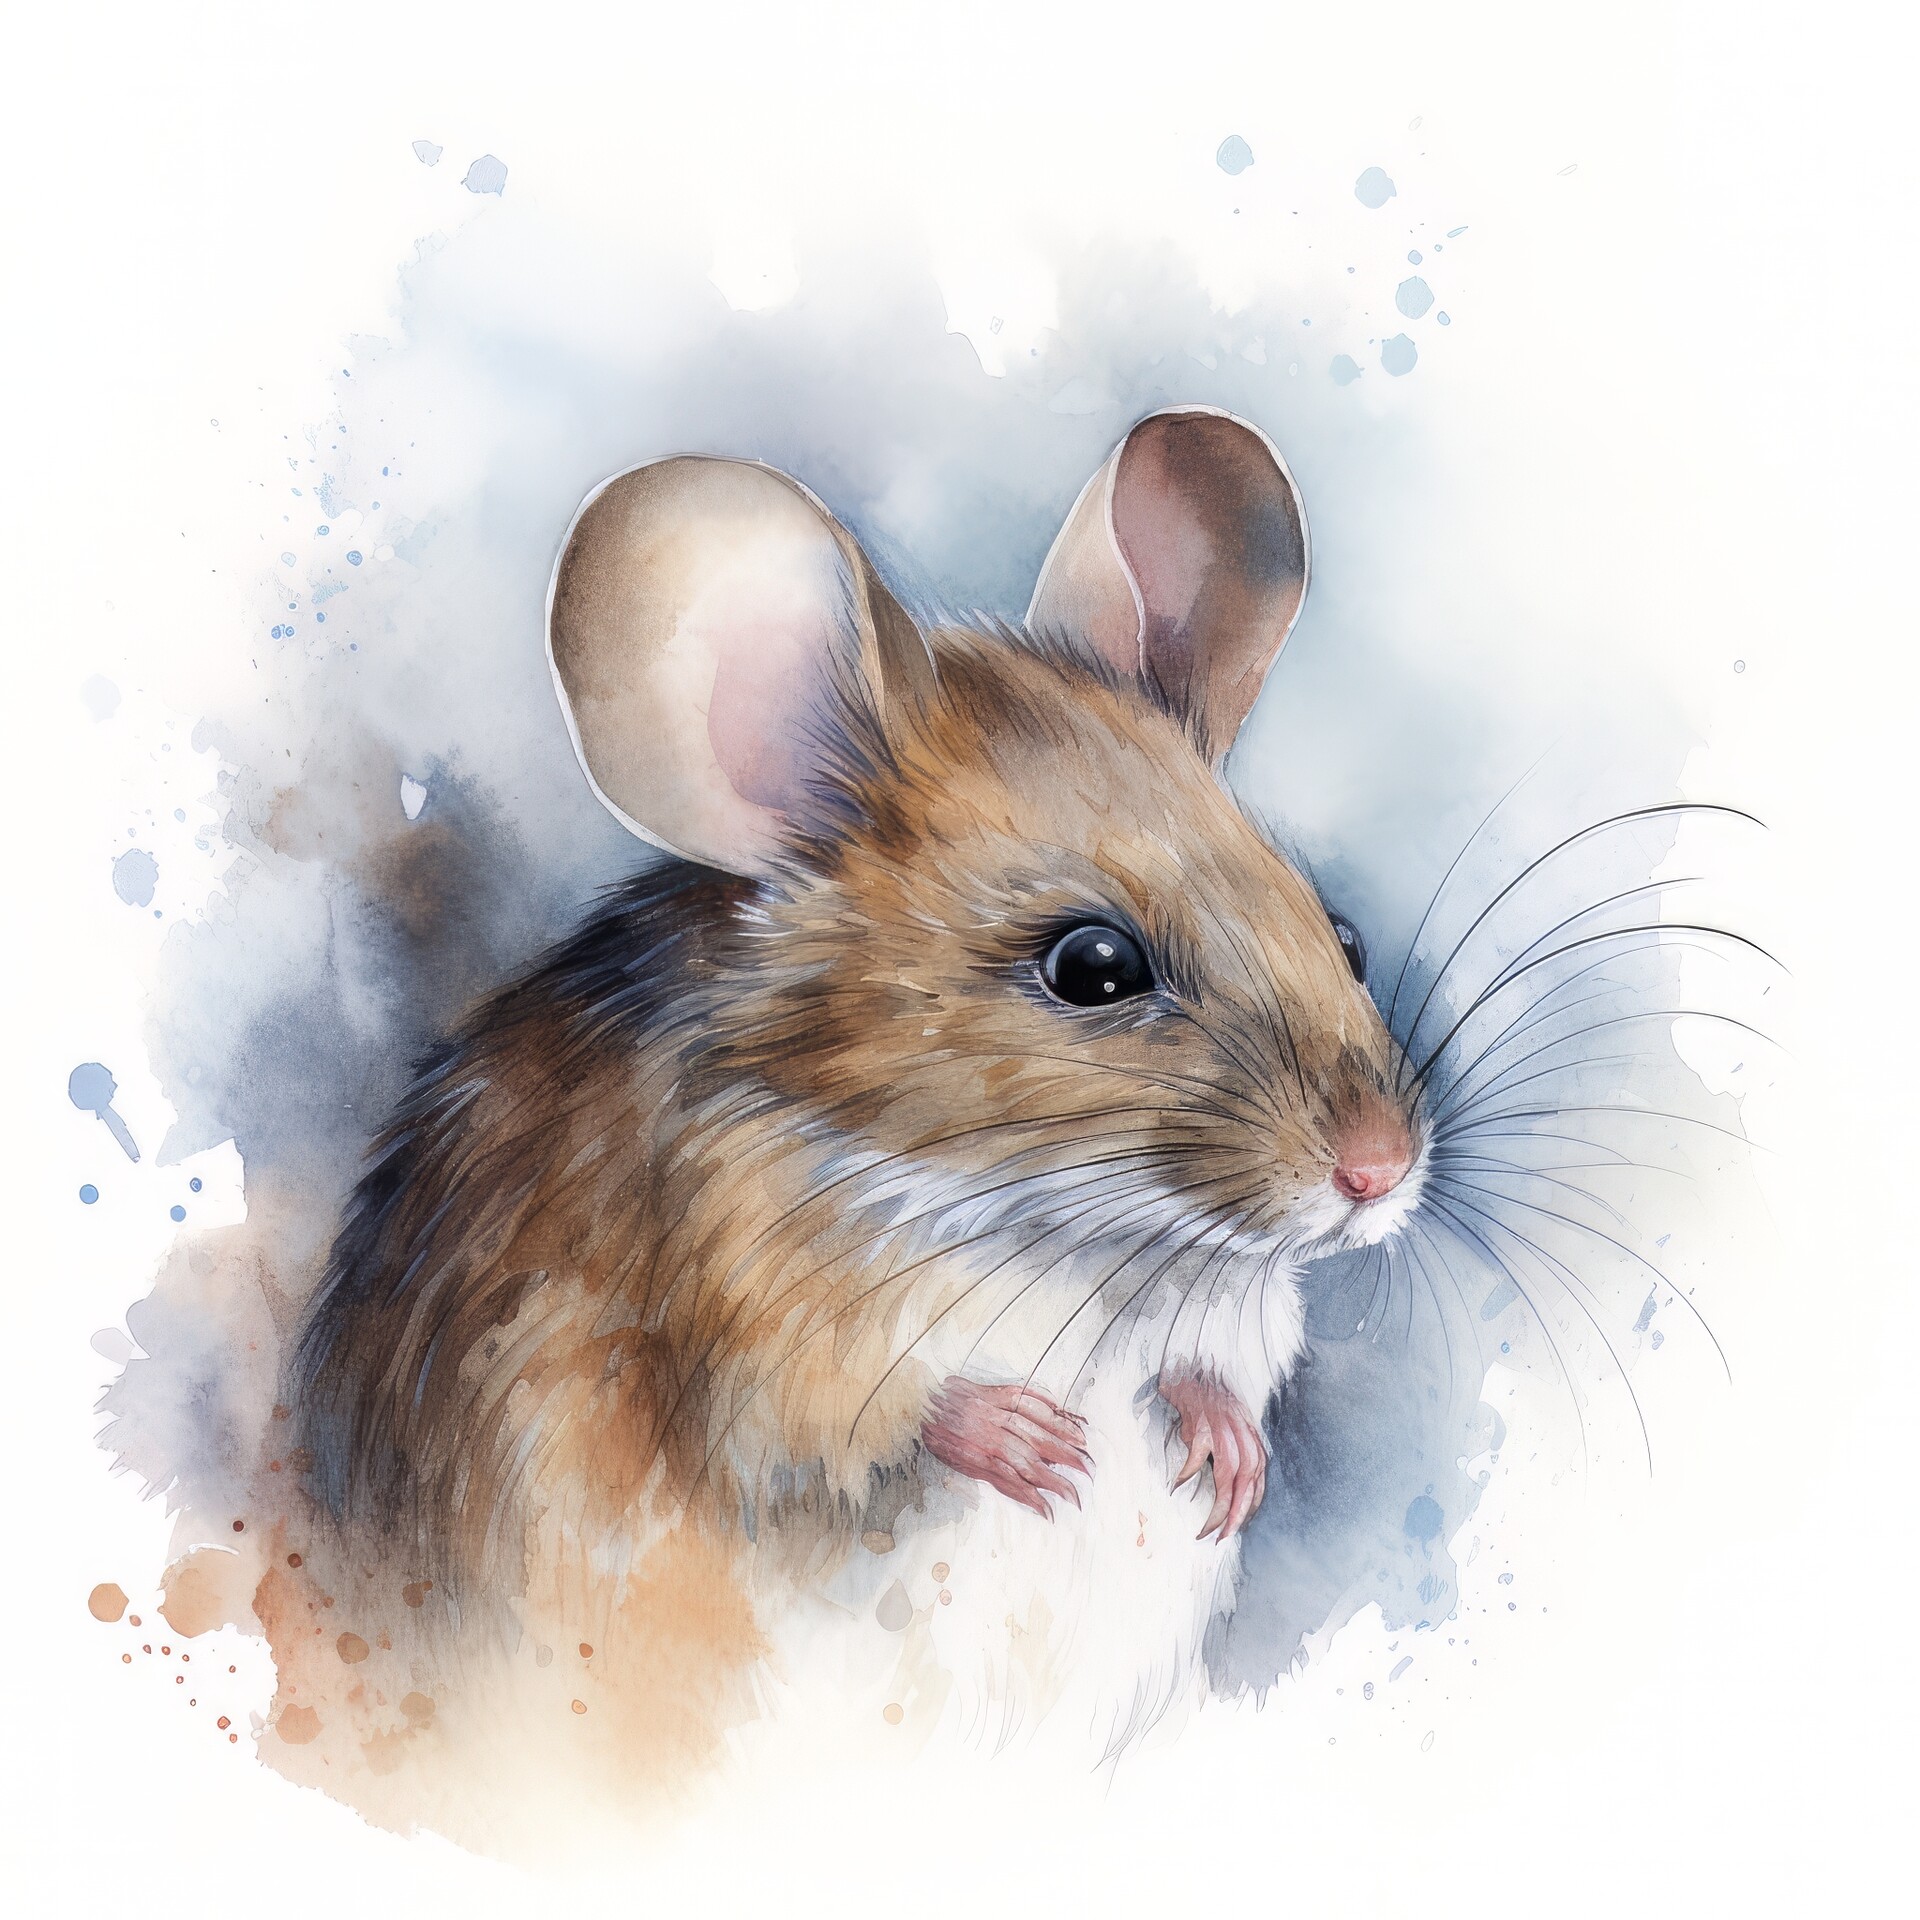 ArtStation - Mouse Animal Portrait Watercolor Painting